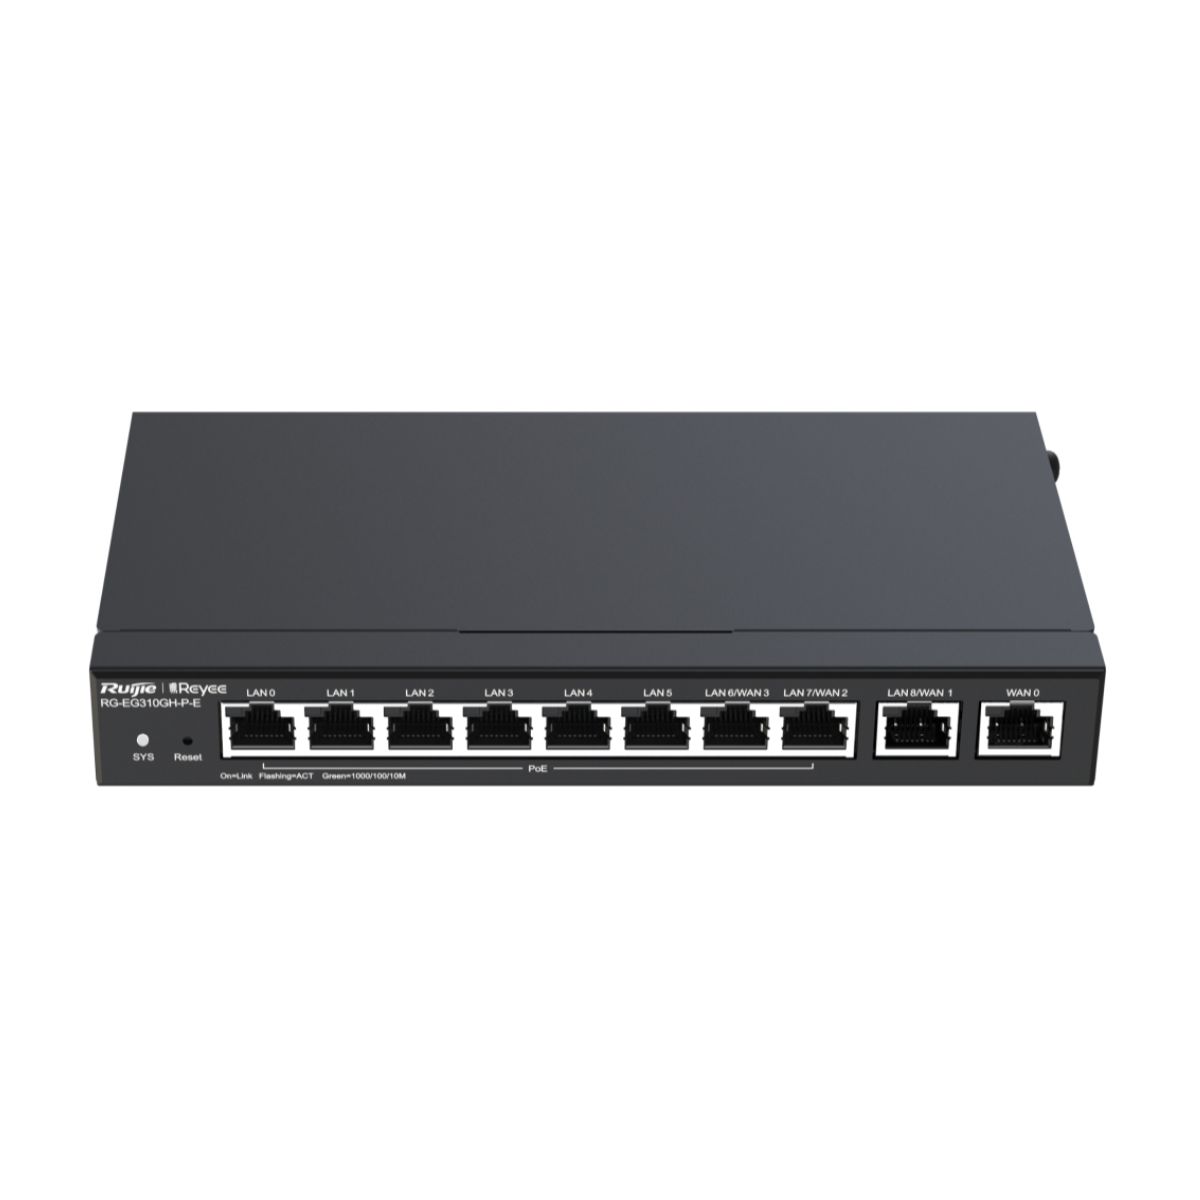 Router Ruijie RG-EG310GH-P-E hỗ trợ 300 user, băng thông 1.5Gbps, 10 port, poe 110W 